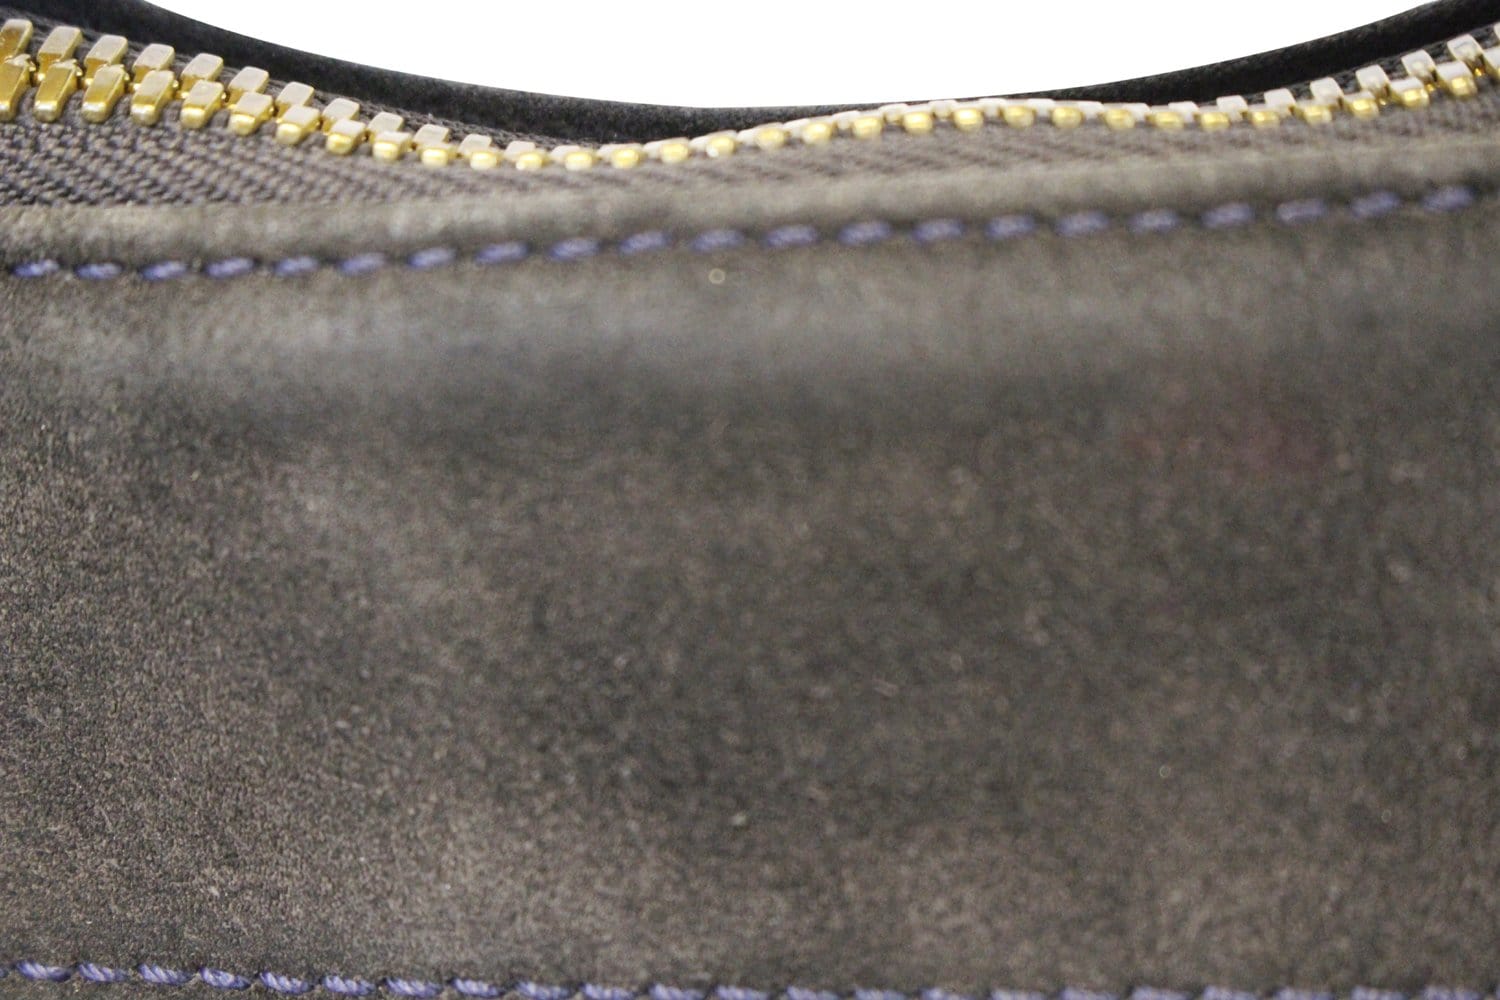 Louis Vuitton Black Monogram Empreinte Leather Audacieuse GM Bag Louis  Vuitton